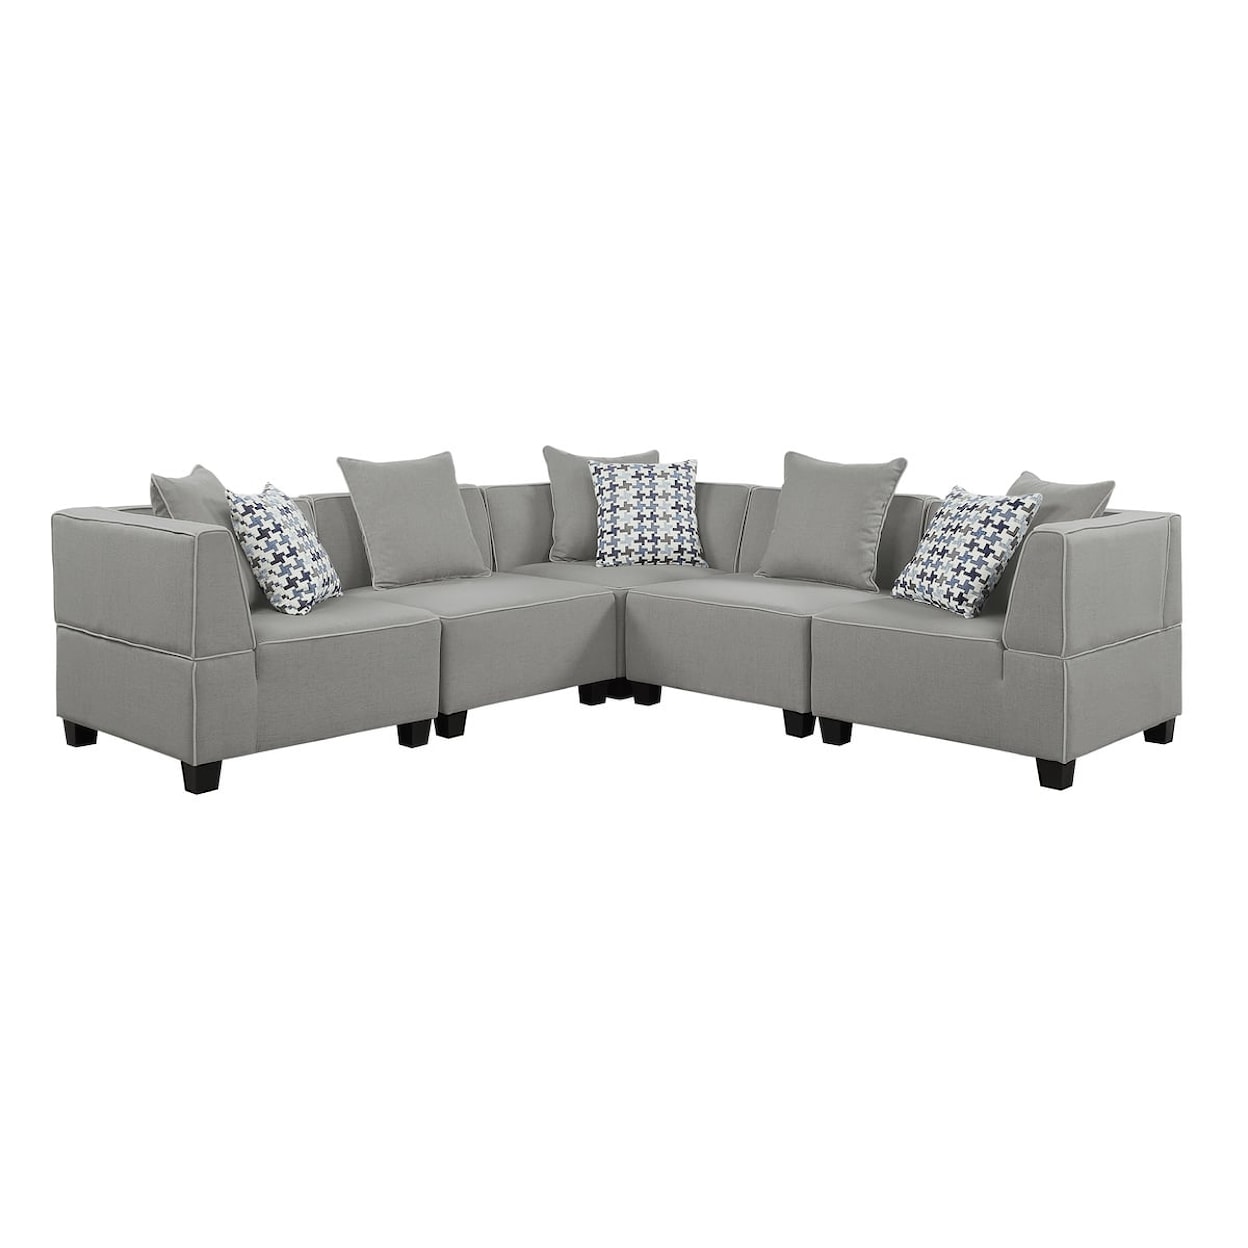 Homelegance Furniture Jayne 5-Piece Sectional Sofa